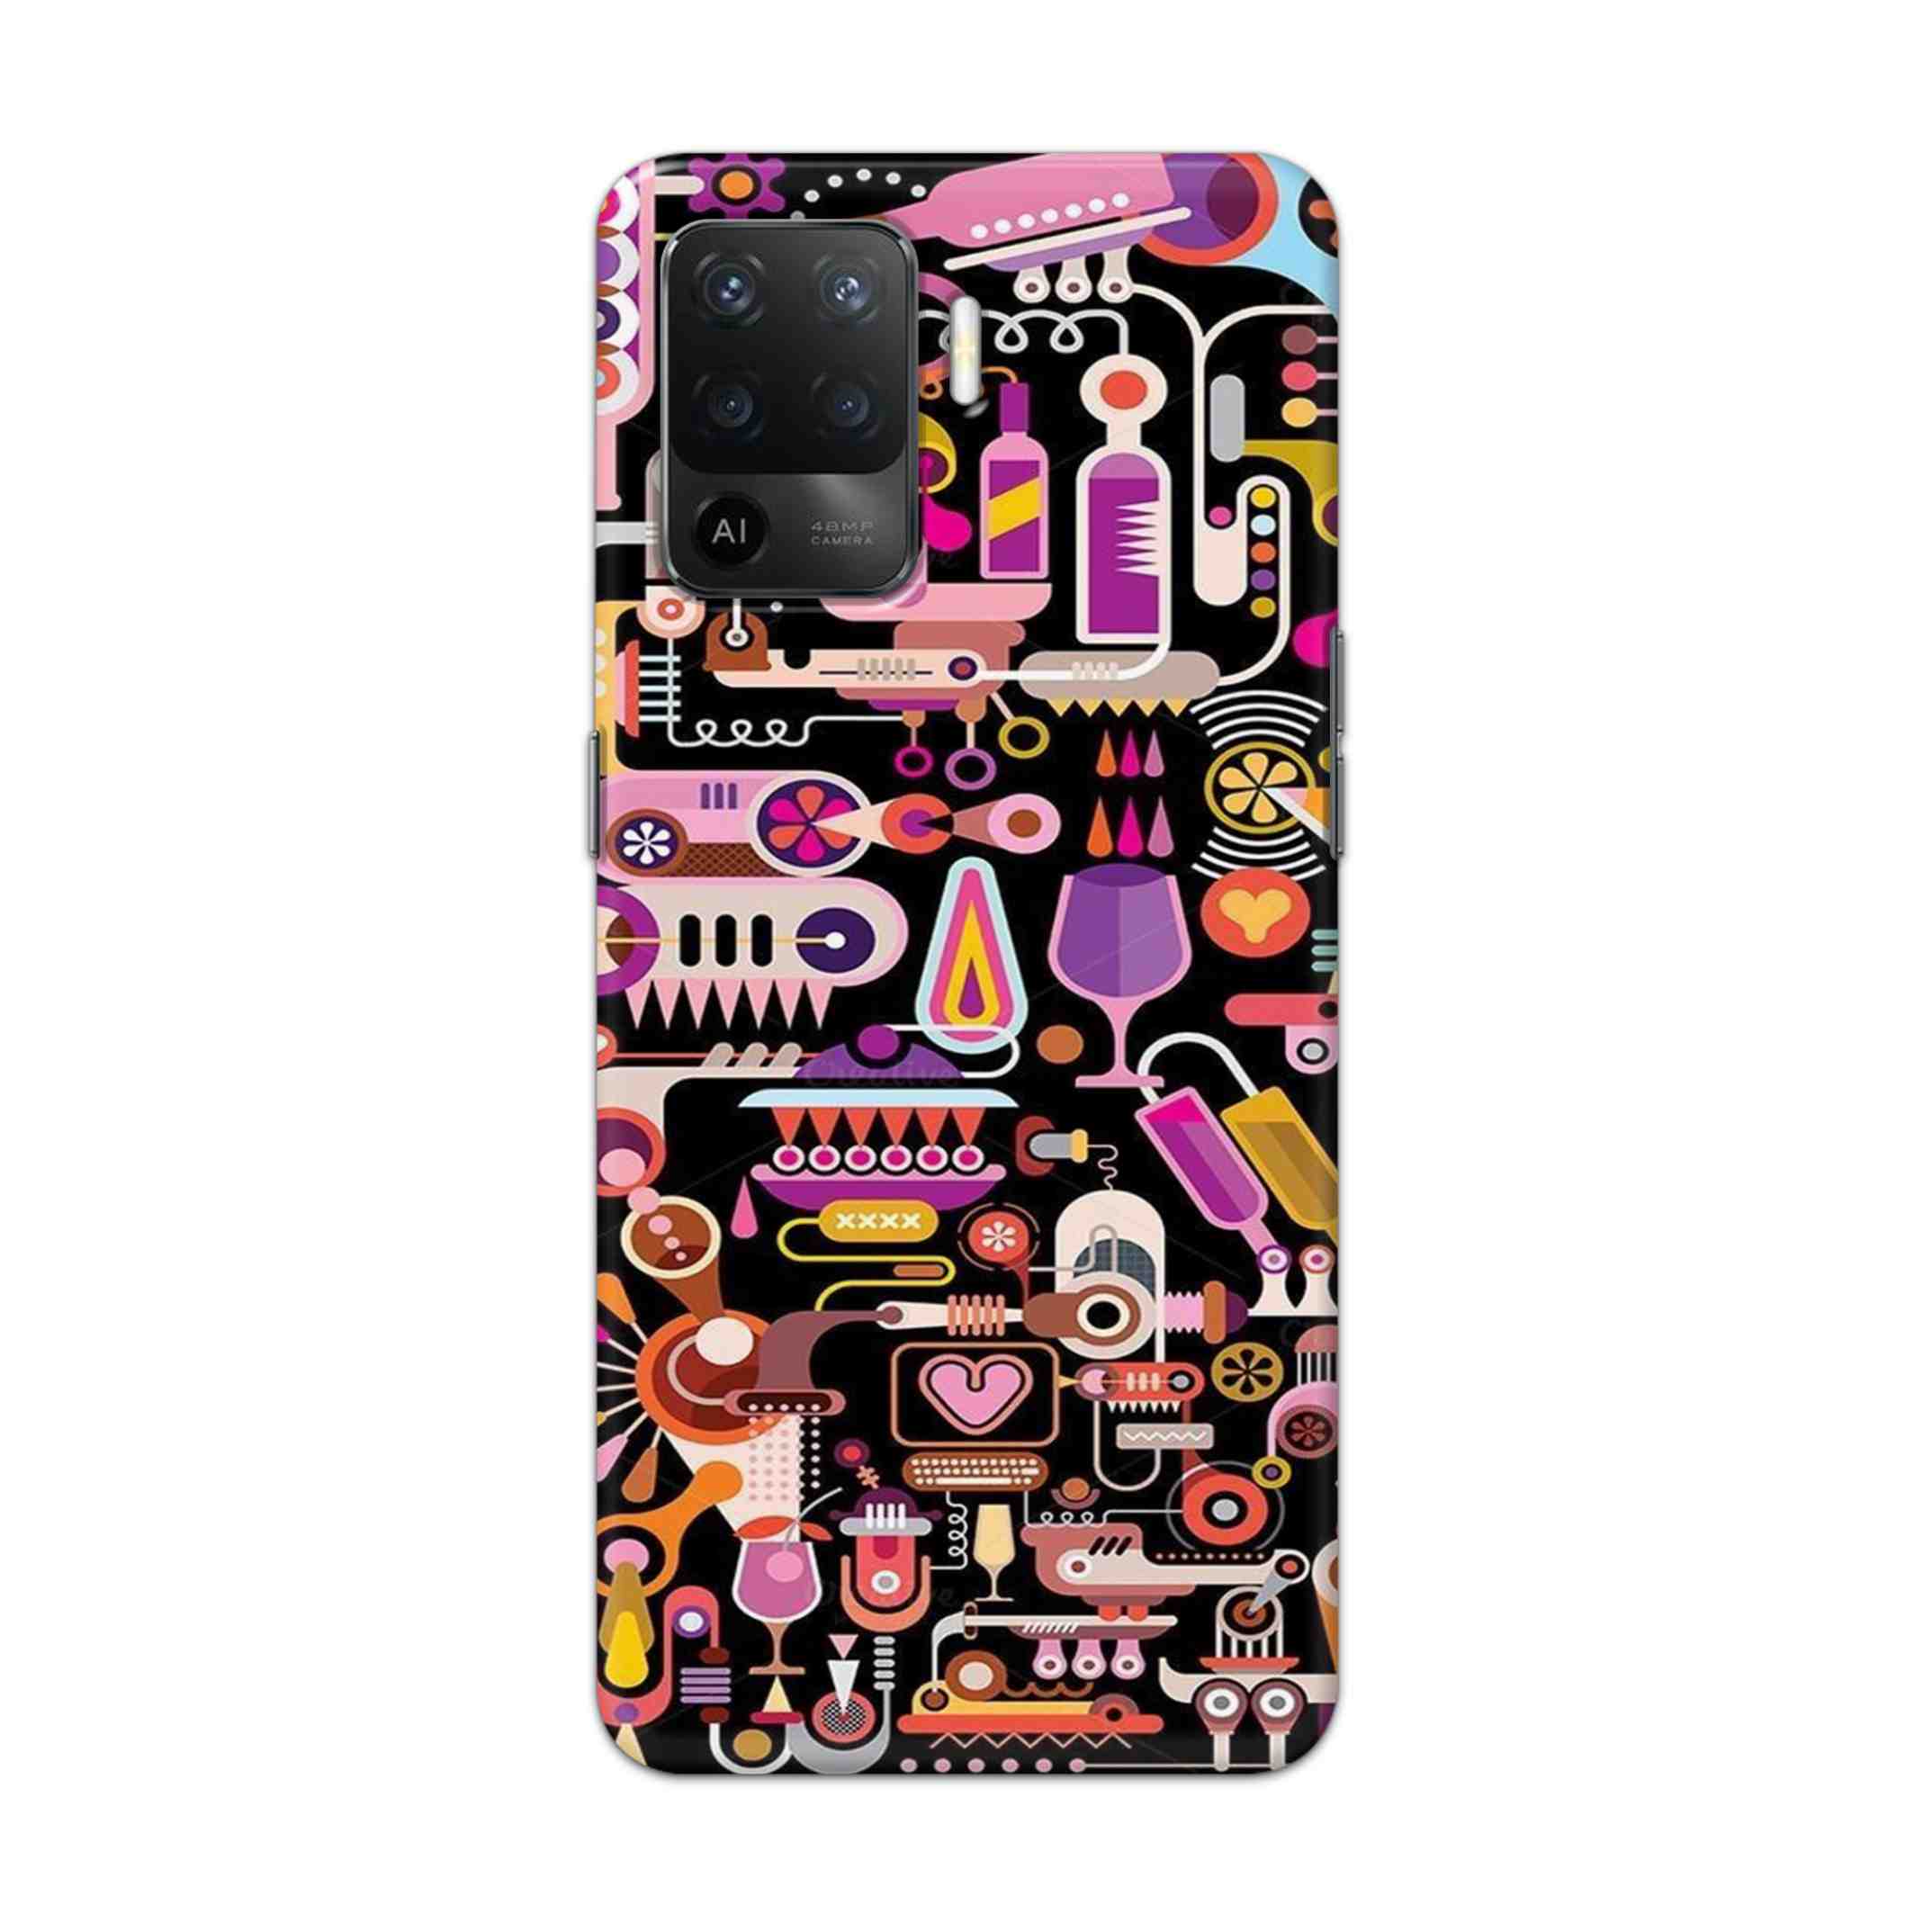 Buy Lab Art Hard Back Mobile Phone Case Cover For Oppo F19 Pro Online